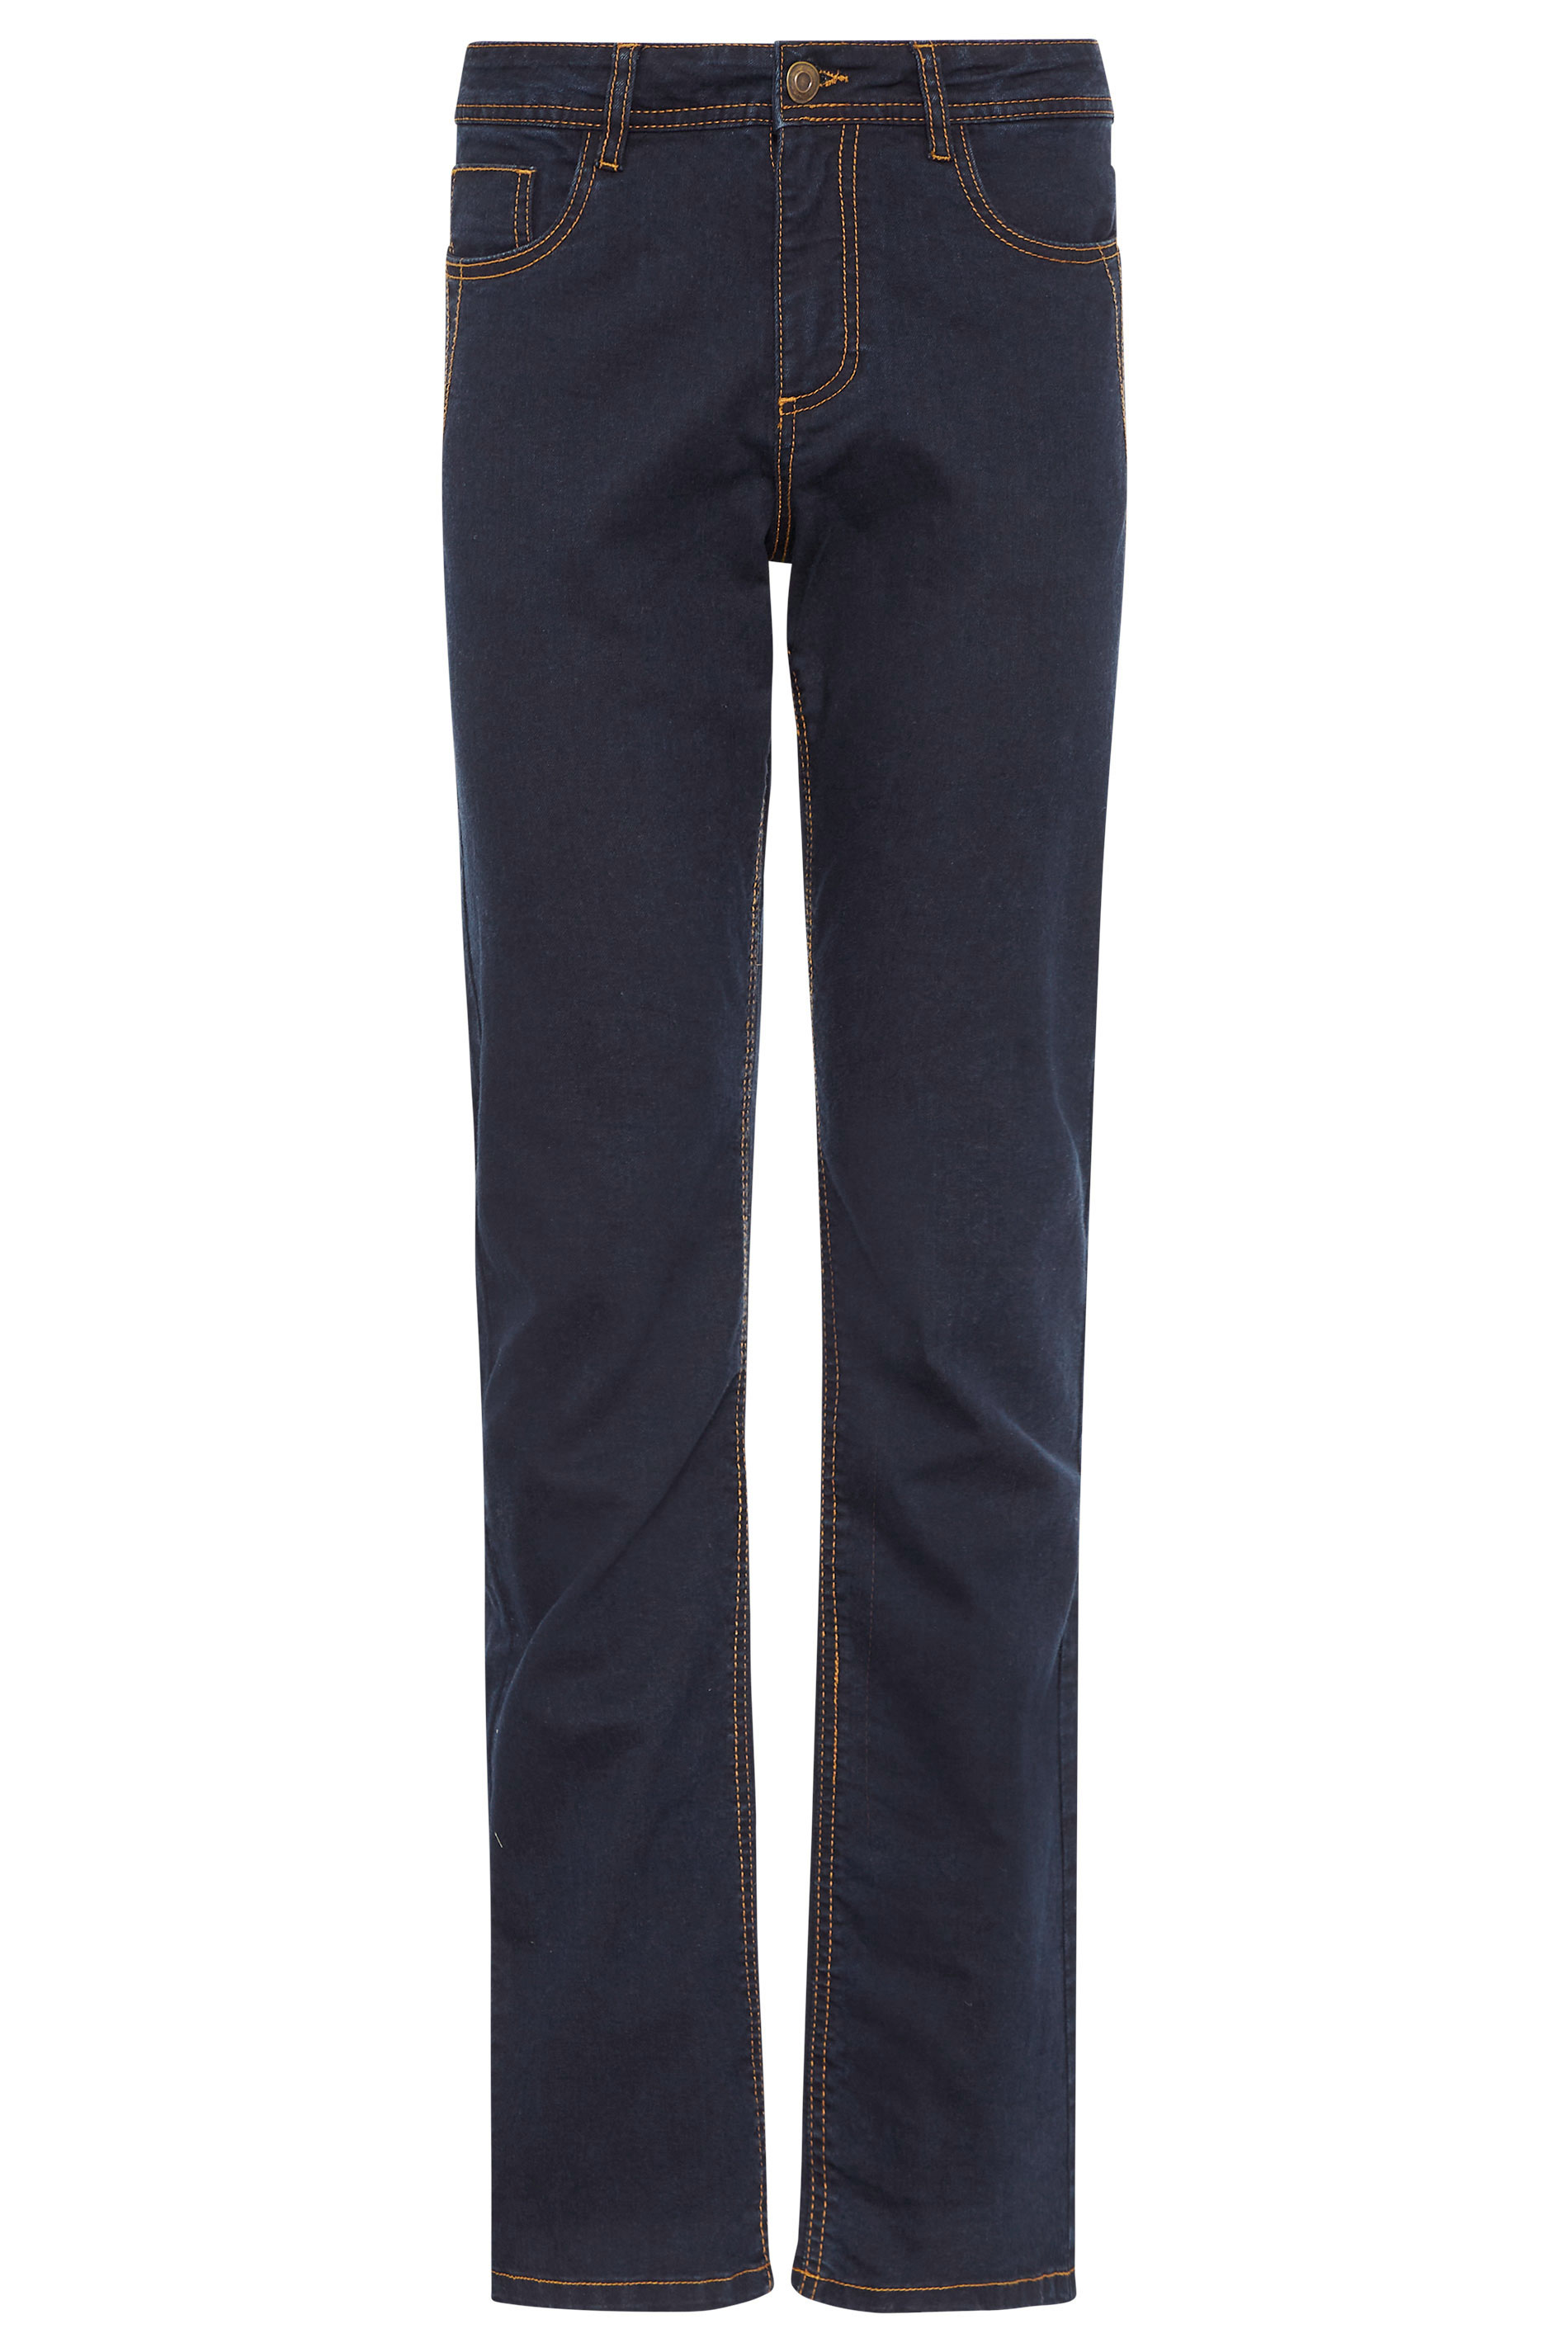 LTS MADE FOR GOOD Indigo Blue Straight Leg Denim Jeans | Long Tall